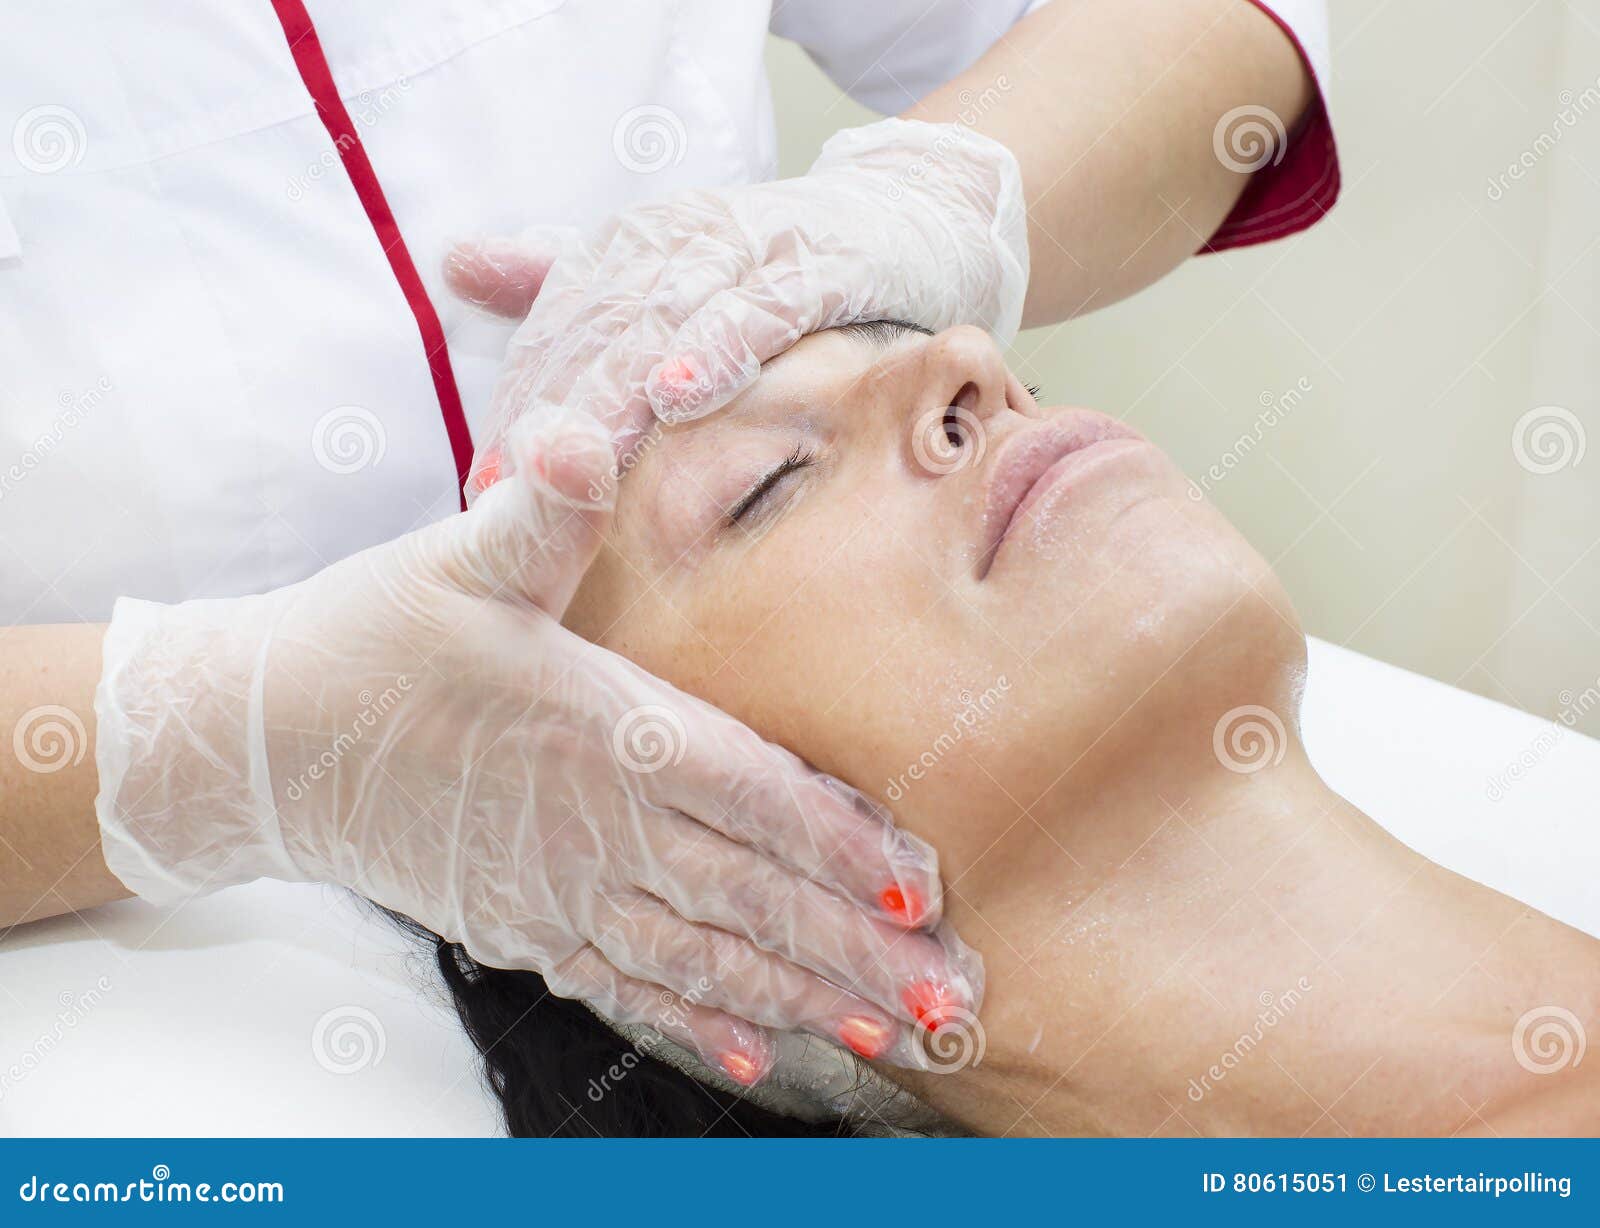 Process Of Massage And Facials Stock Image Image Of Neck Beautiful